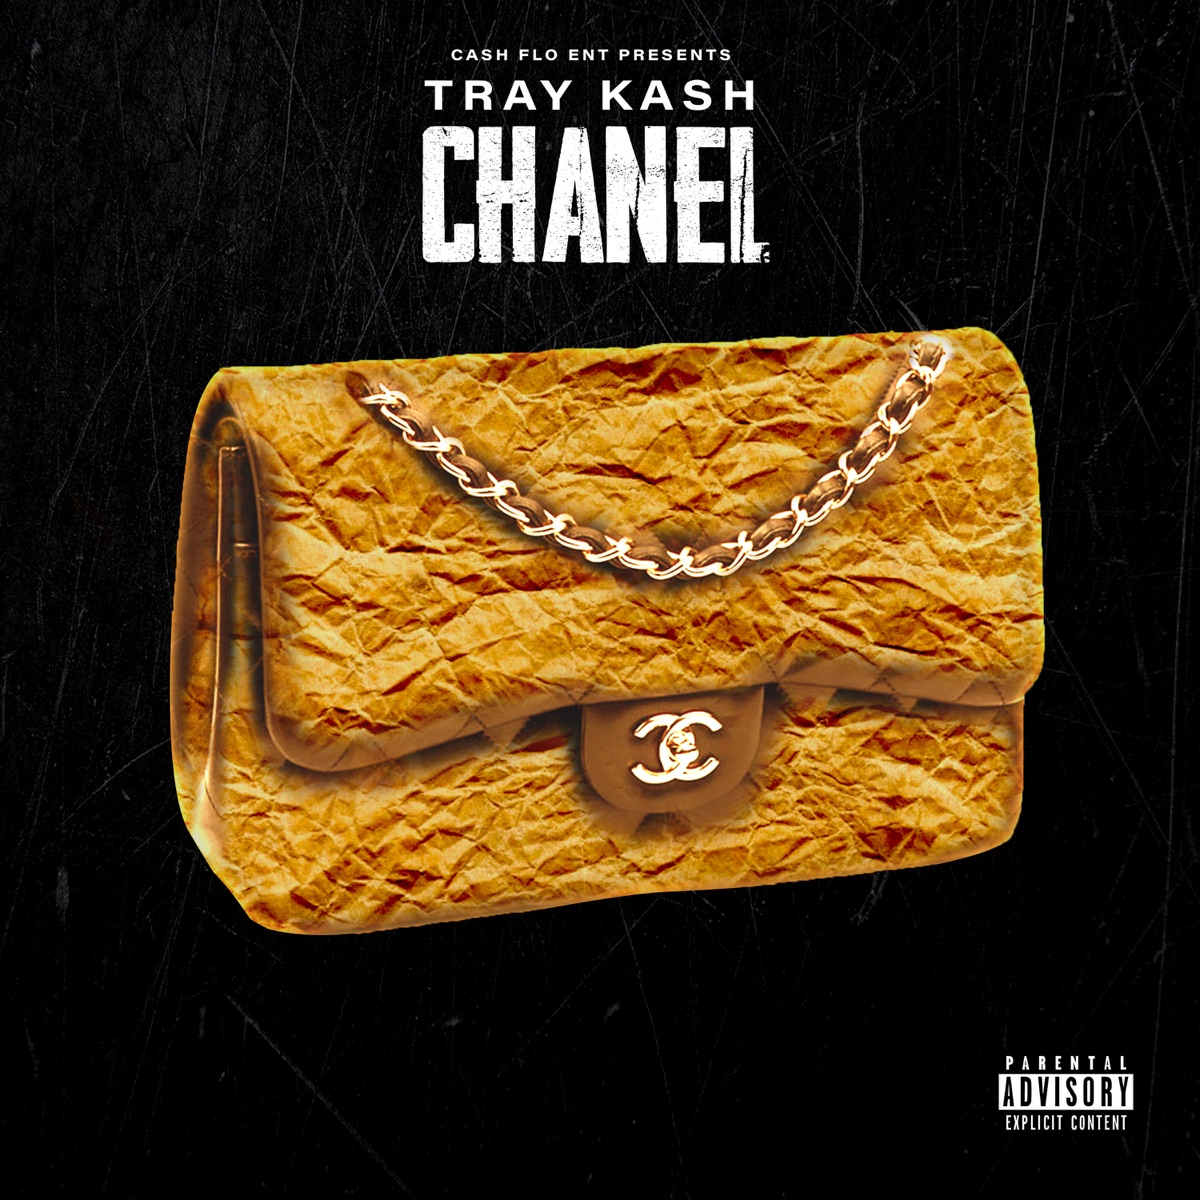 Chanel - Single - Album by Tray Kash - Apple Music